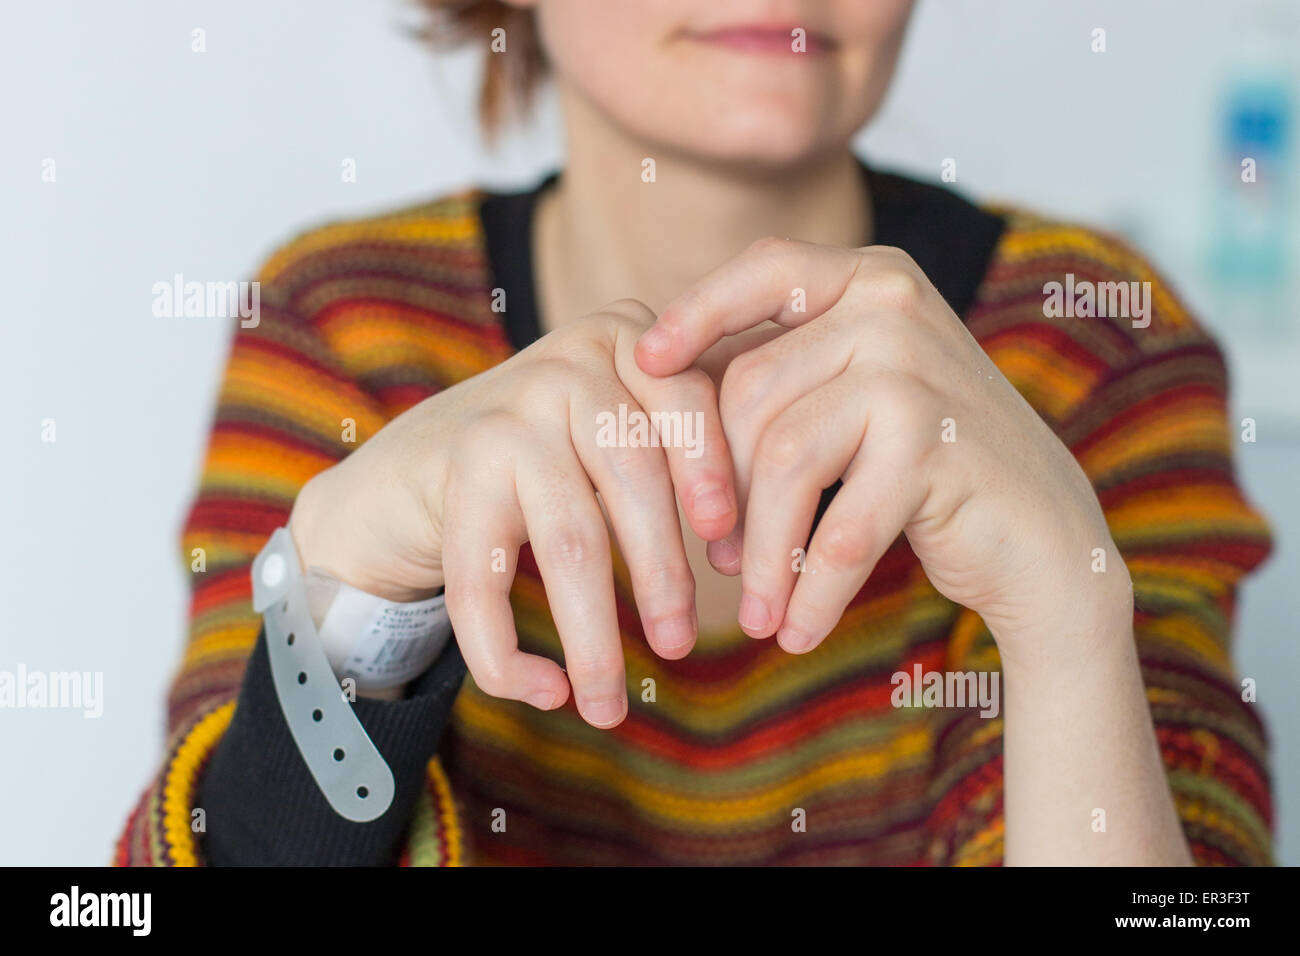 Hands of a woman with rheumatoid arthritis. Stock Photo